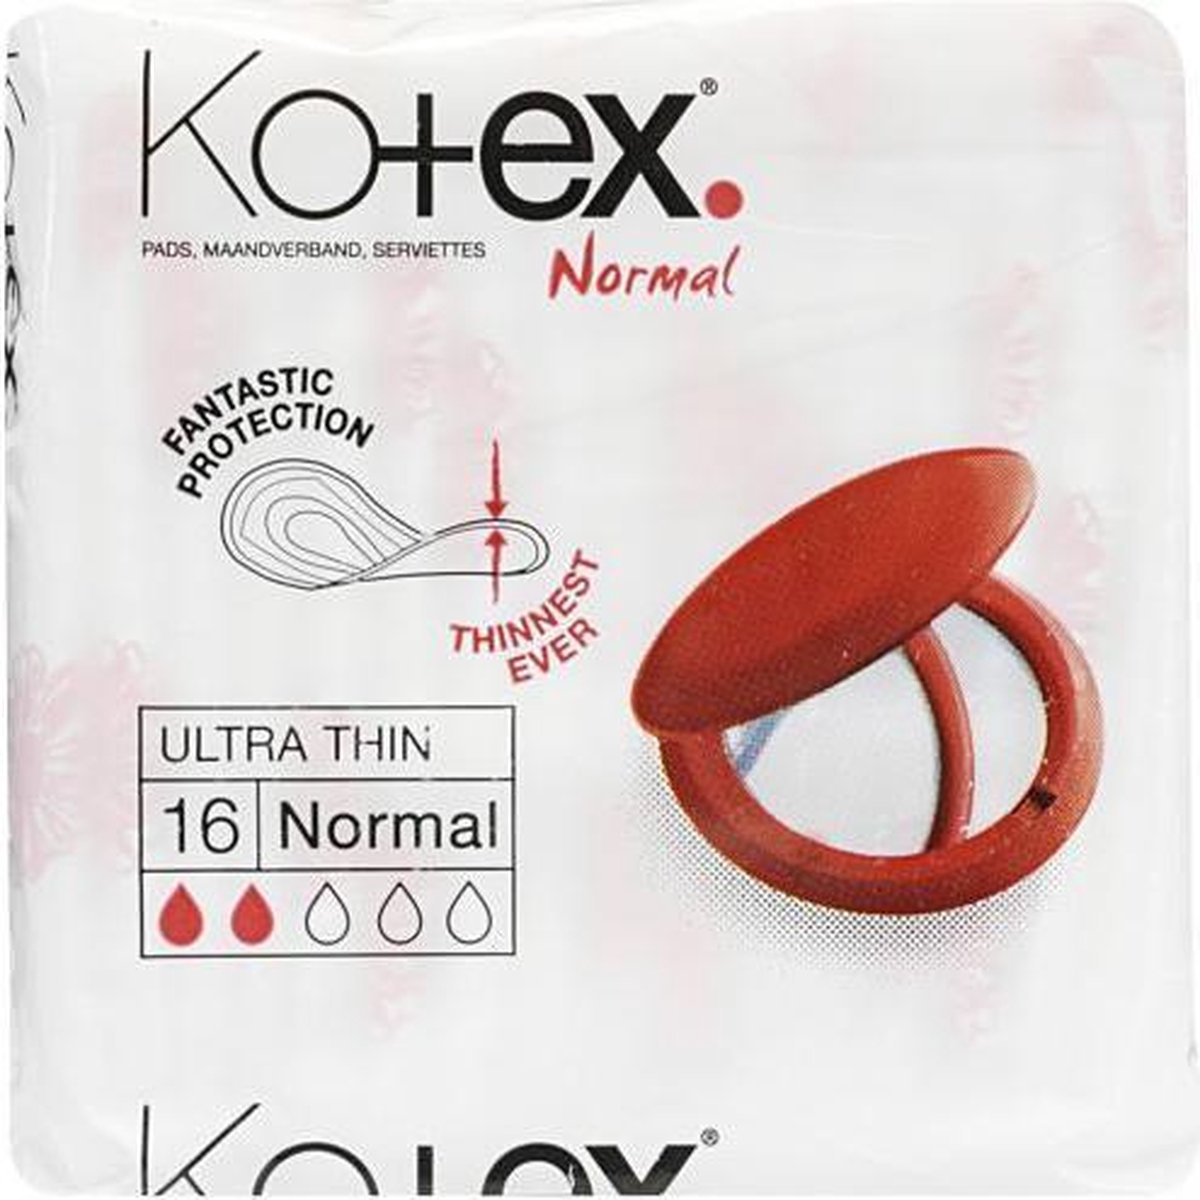 Kotex Ultradun Normal